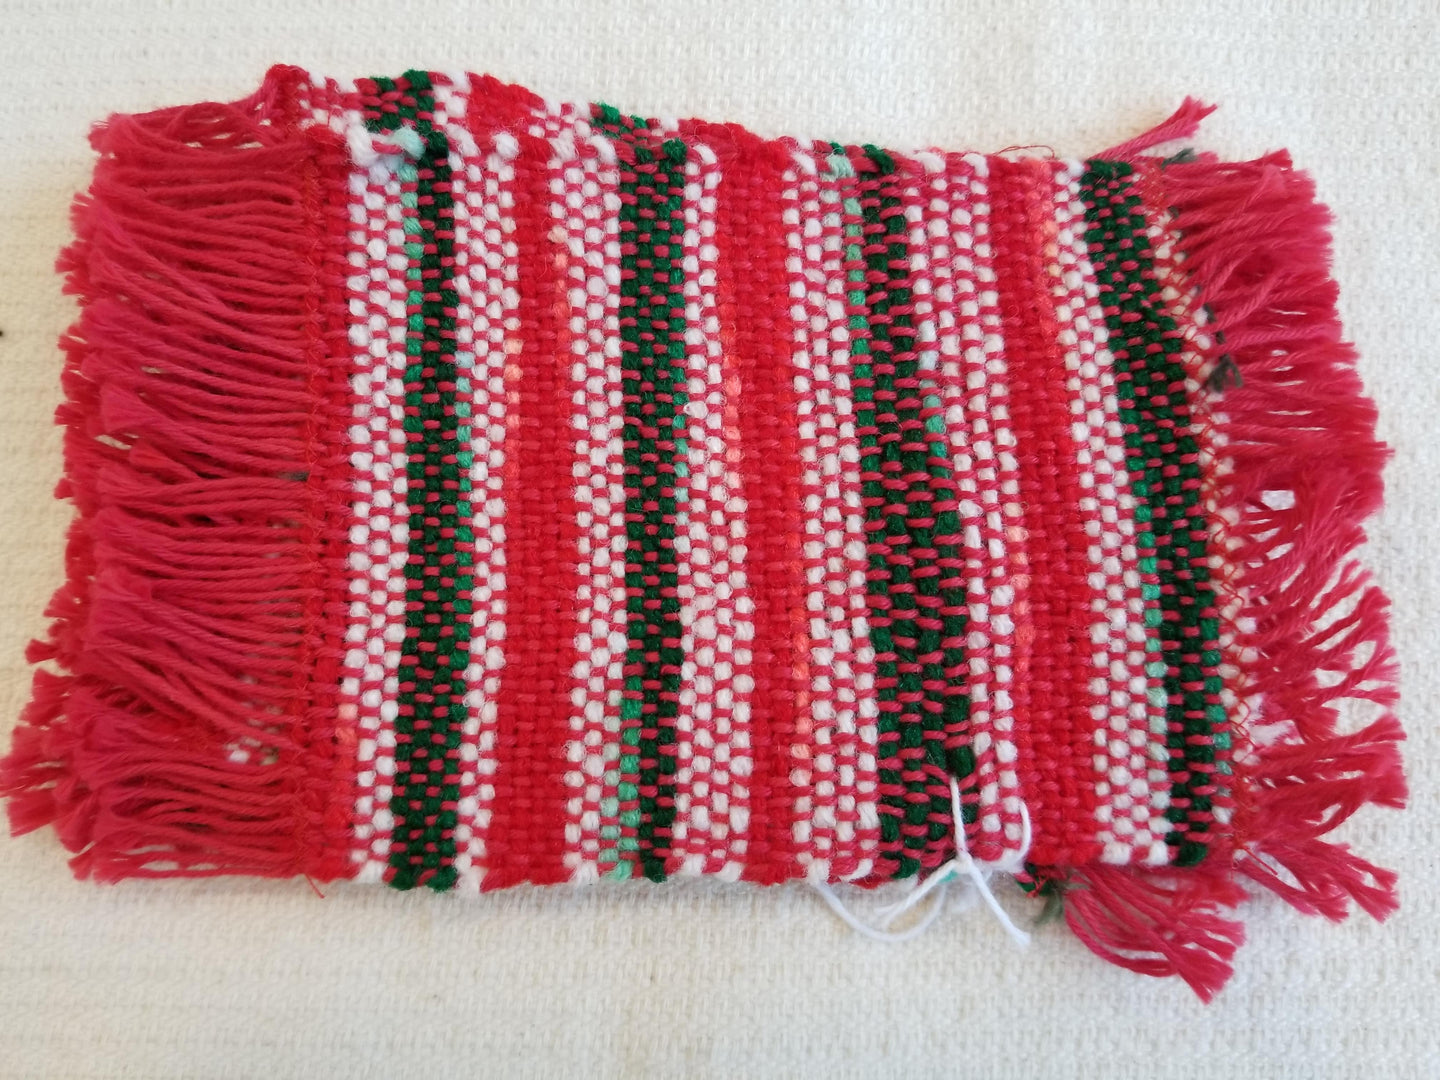 Woven coaster red stripes handmade by Rainbow Acres Ministry, Arizona. Set of 2